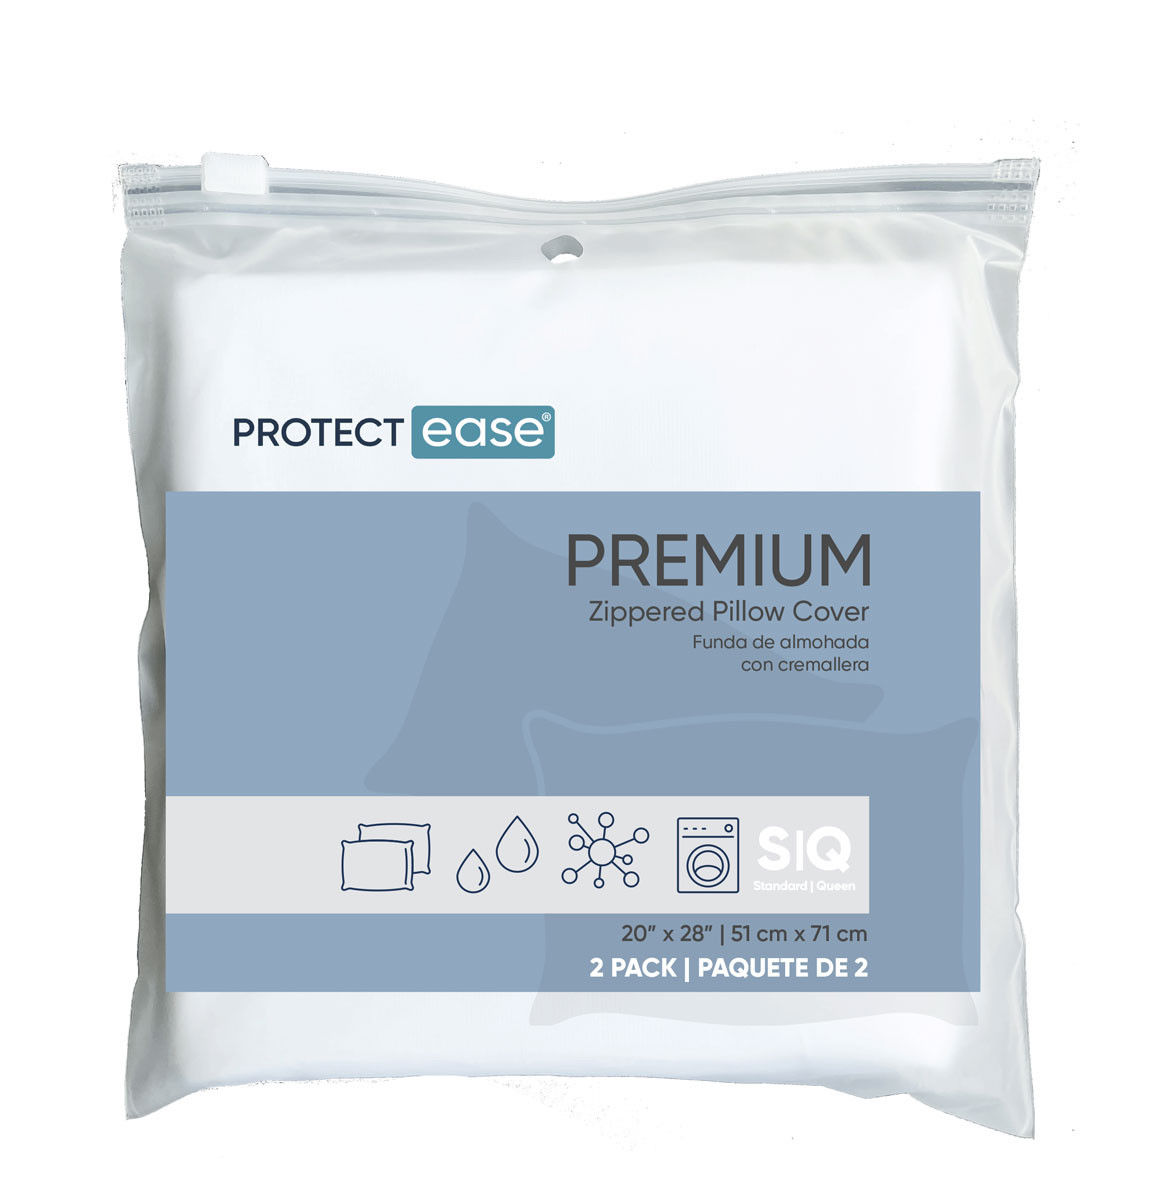 What's the main function of pillow encasements like ProtectEase® PREMIUM LINE?